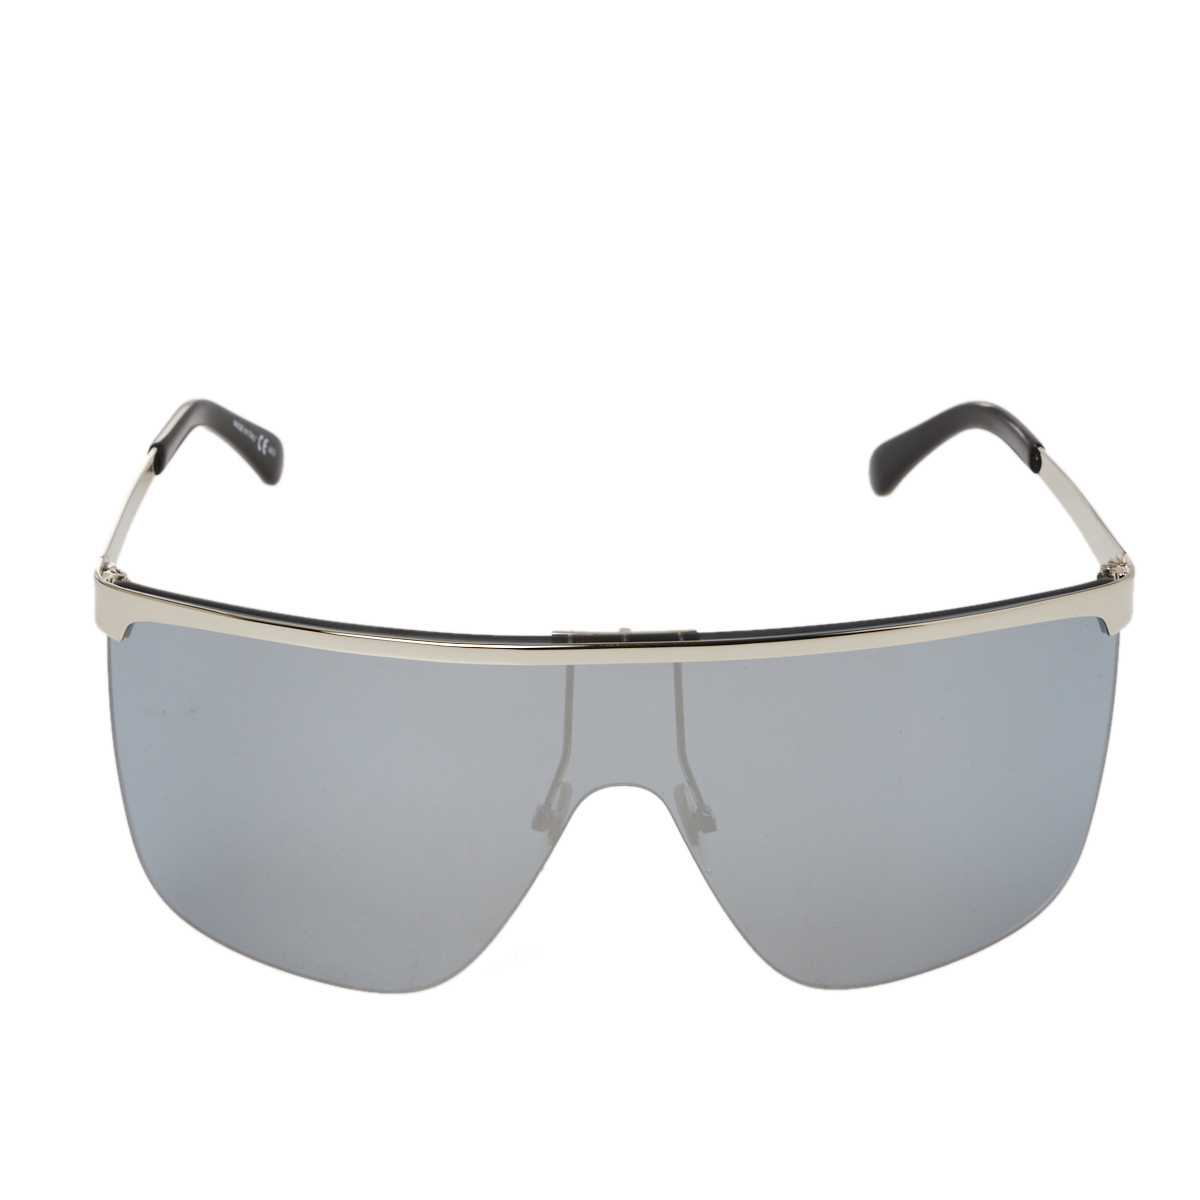 Givenchy Silver Tone/Silver Mirrored GV 7117/S Shield Sunglasses